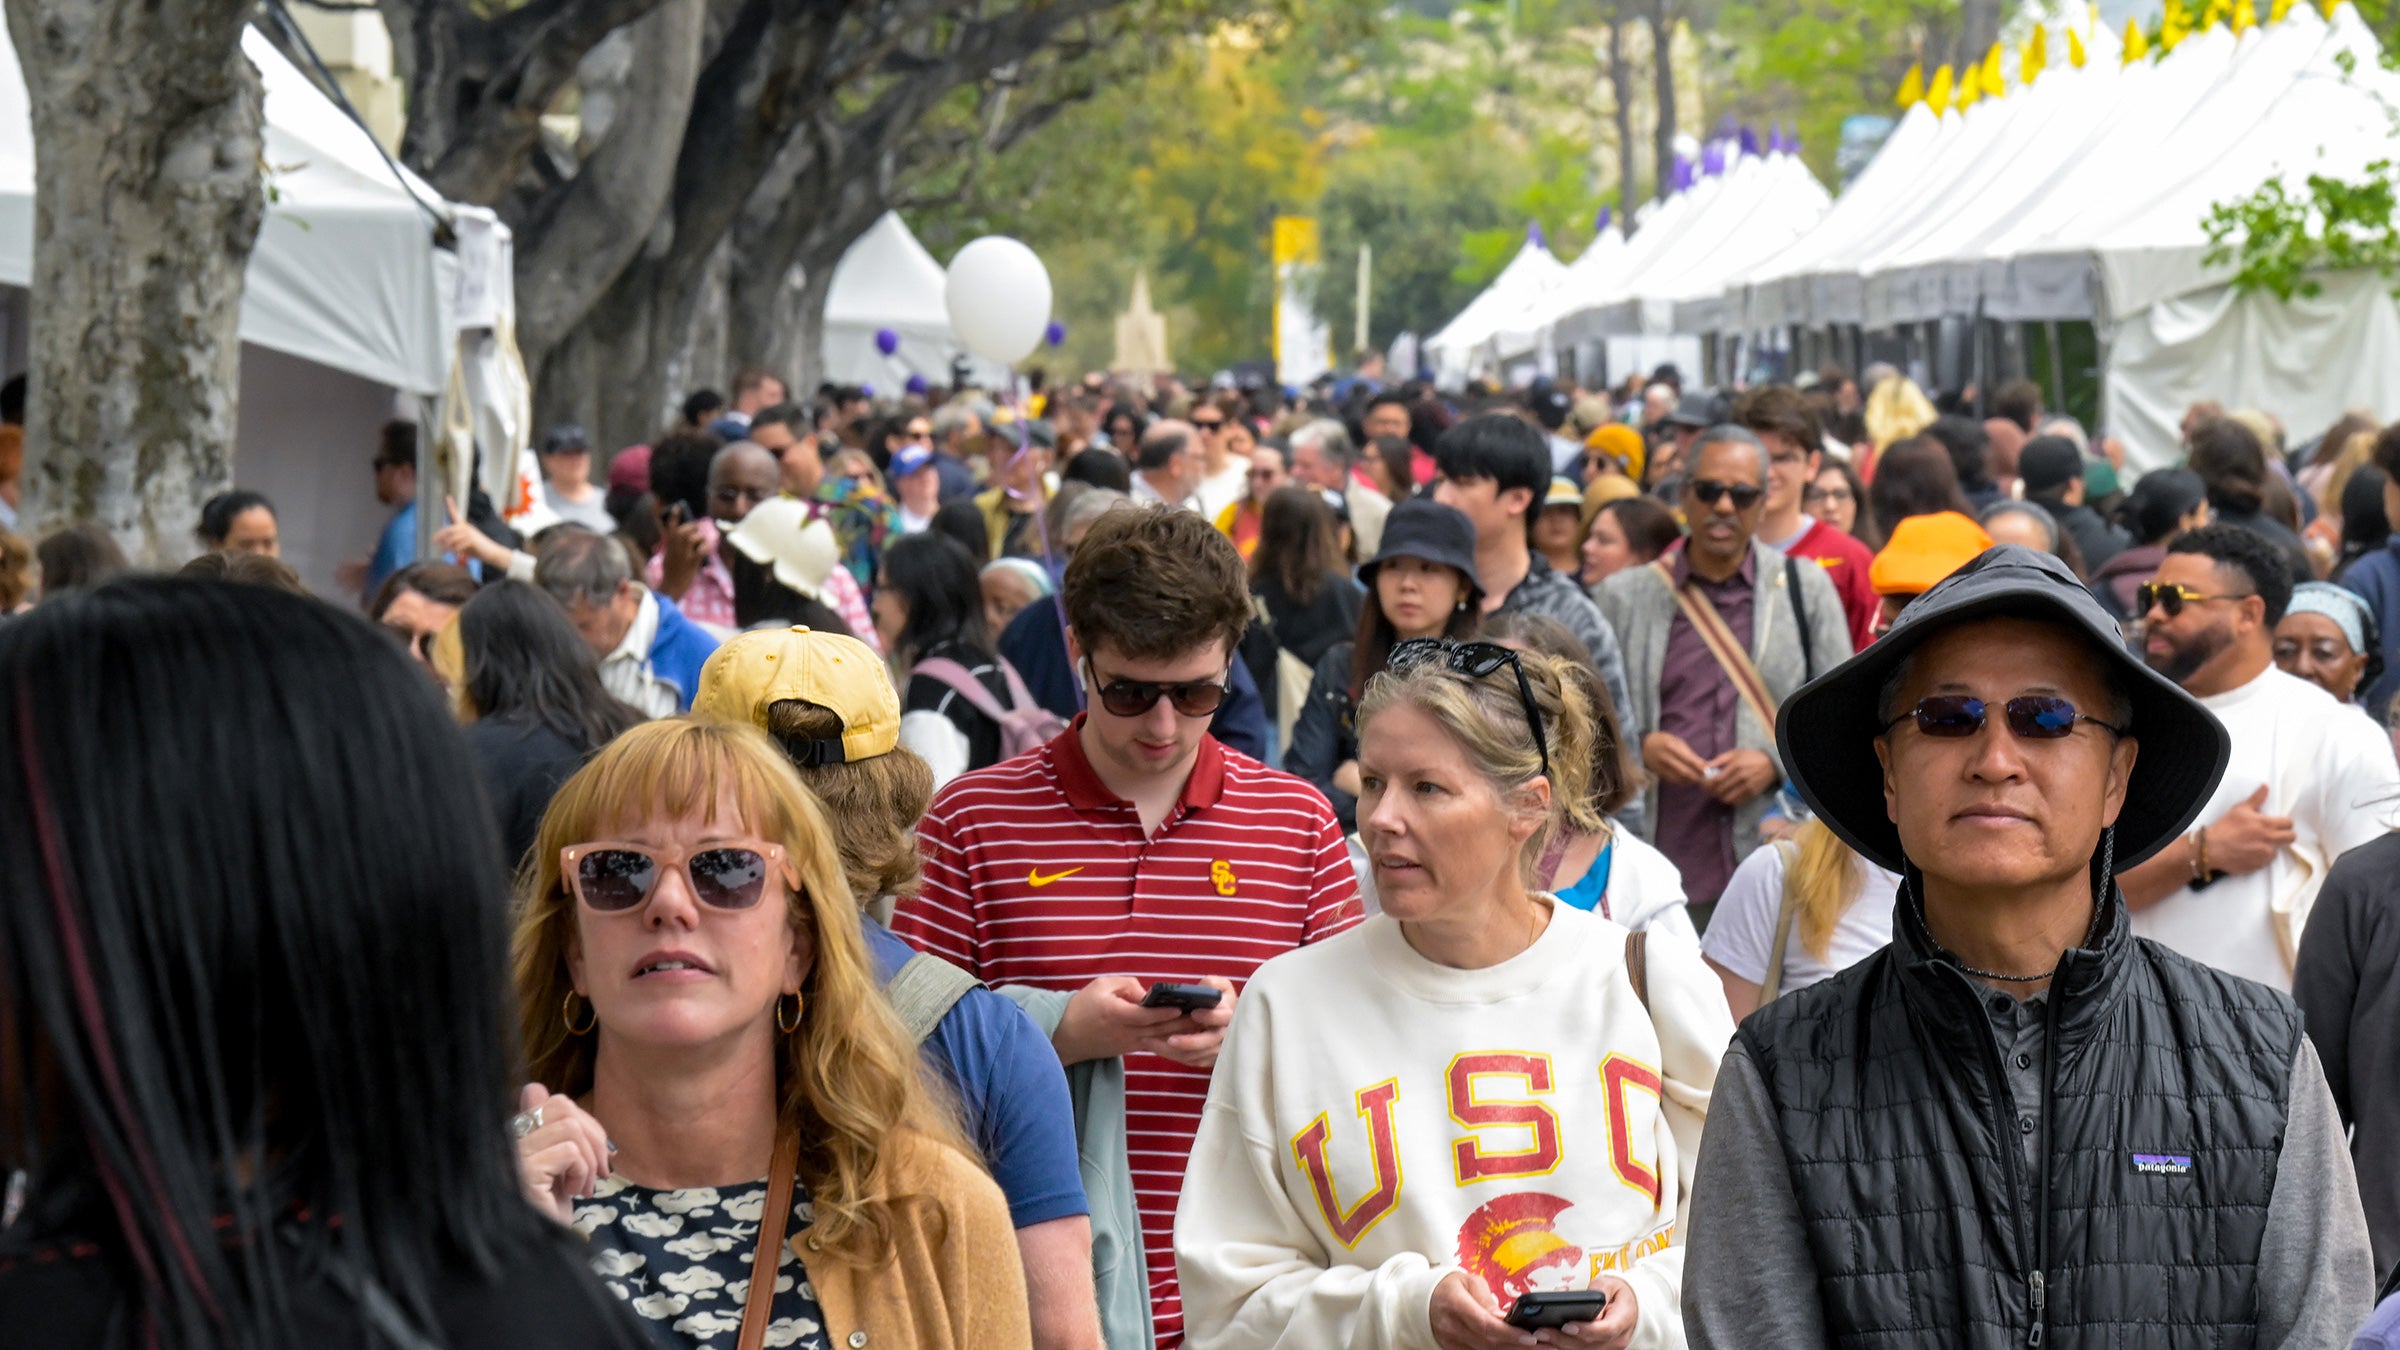 L.A. Times Festival of Books draws big crowds to USC University Park
Campus